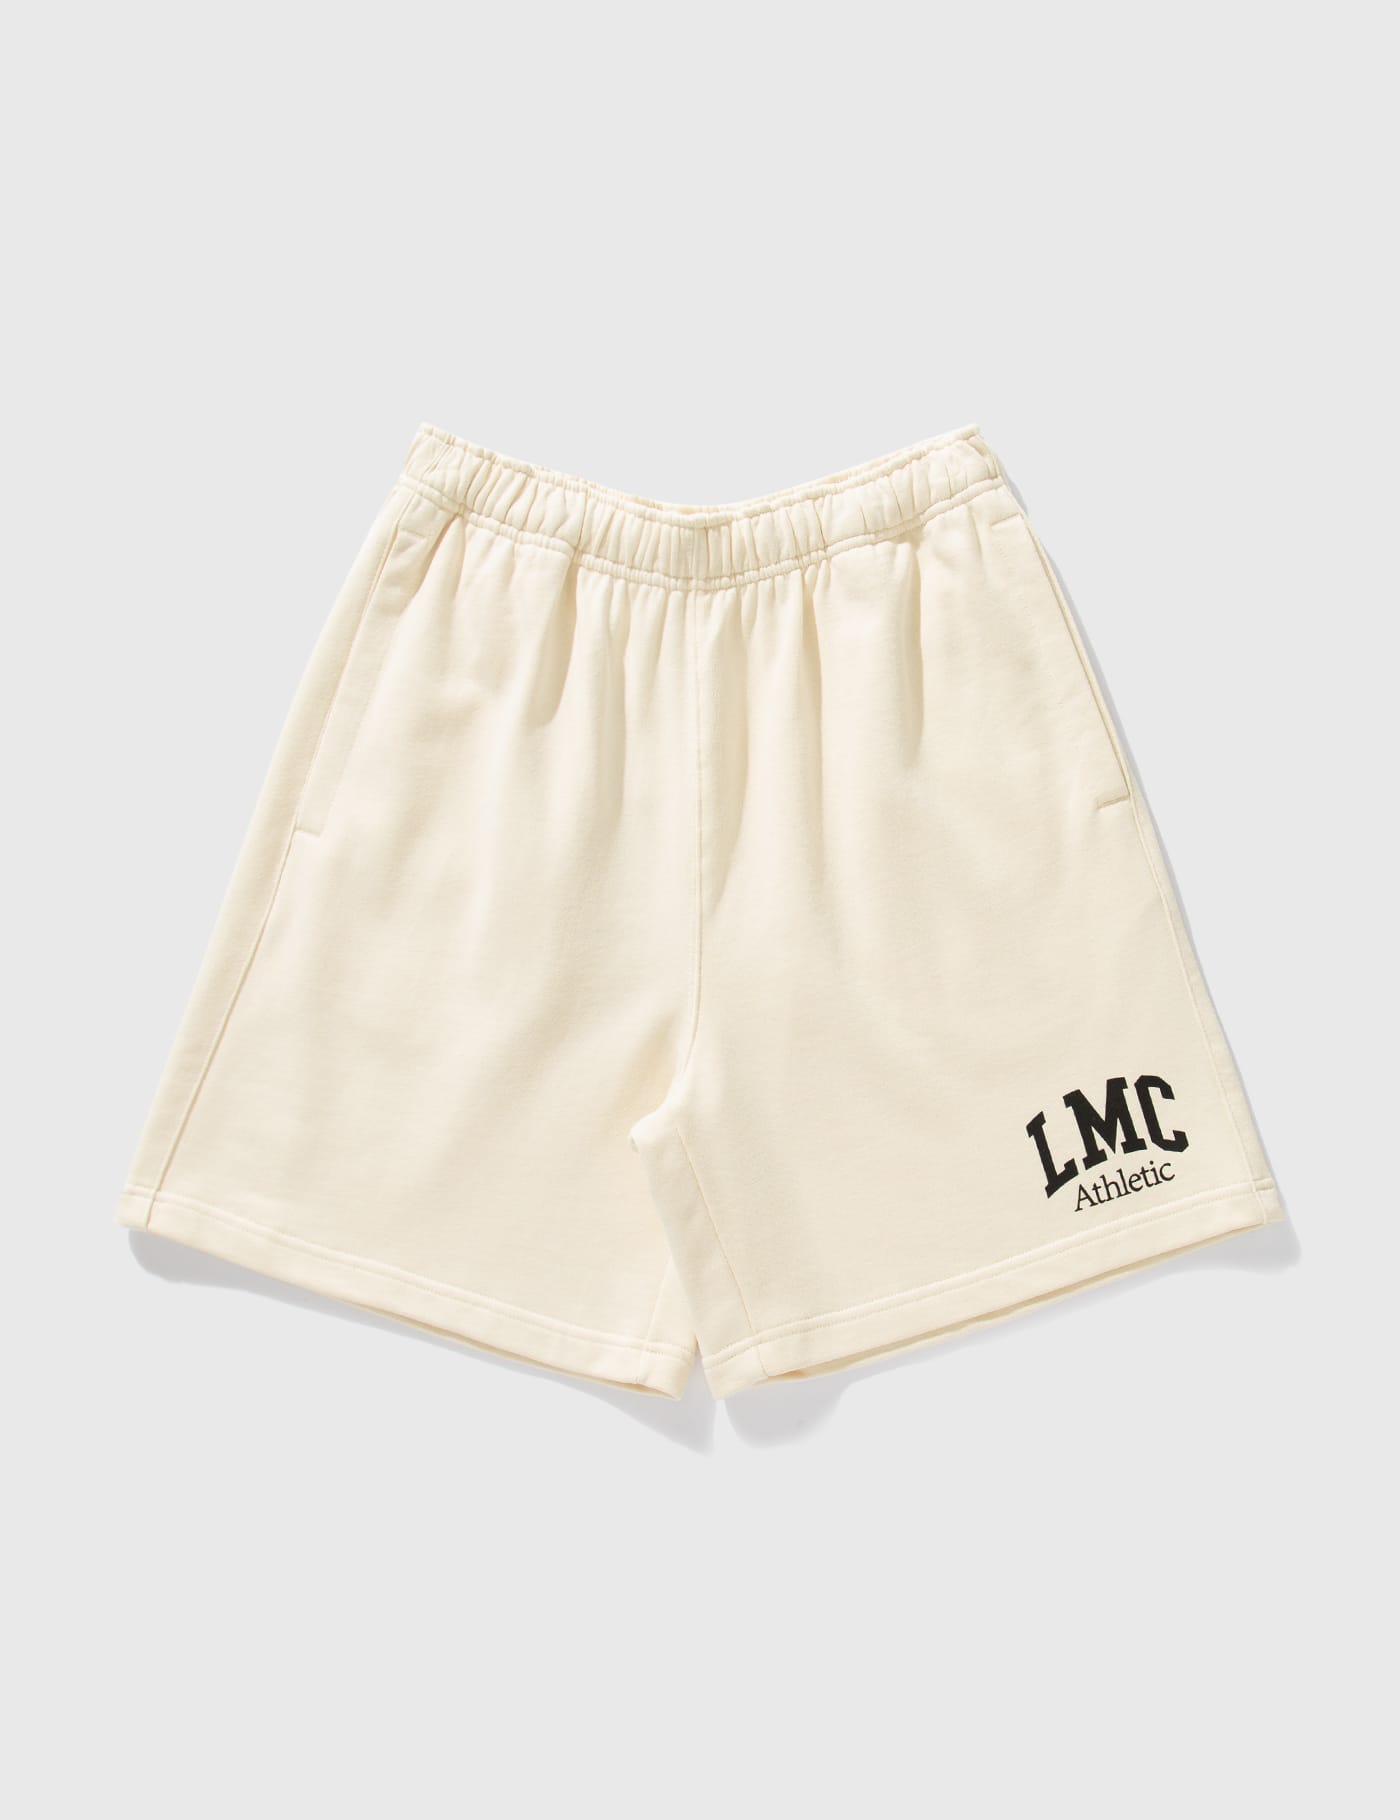 LMC - LMC Flame Bear T-shirt | HBX - Globally Curated Fashion and 